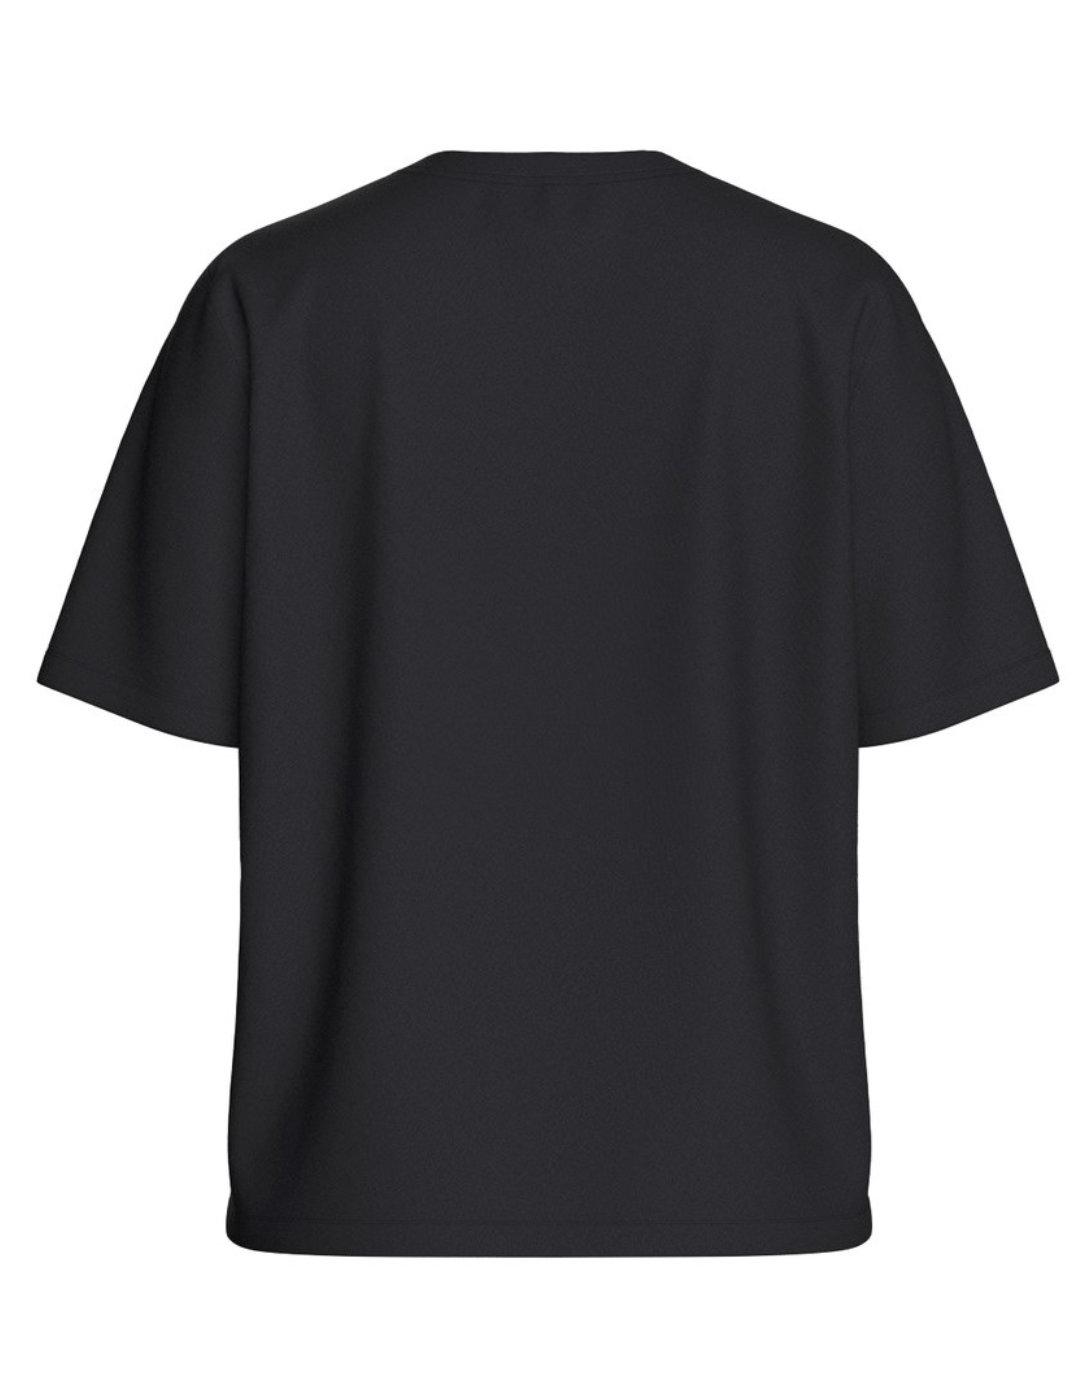 Camiseta Only Lili negro manga corta para mujer